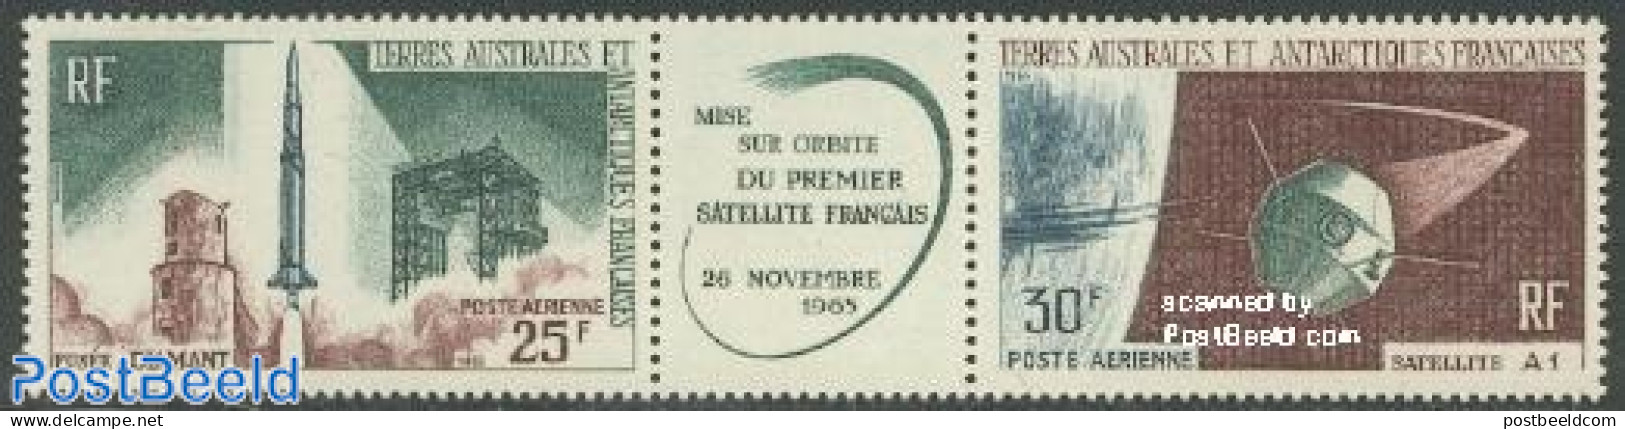 French Antarctic Territory 1966 Satellites 2v+tab [:T:], Unused (hinged), Transport - Various - Space Exploration - Jo.. - Ongebruikt